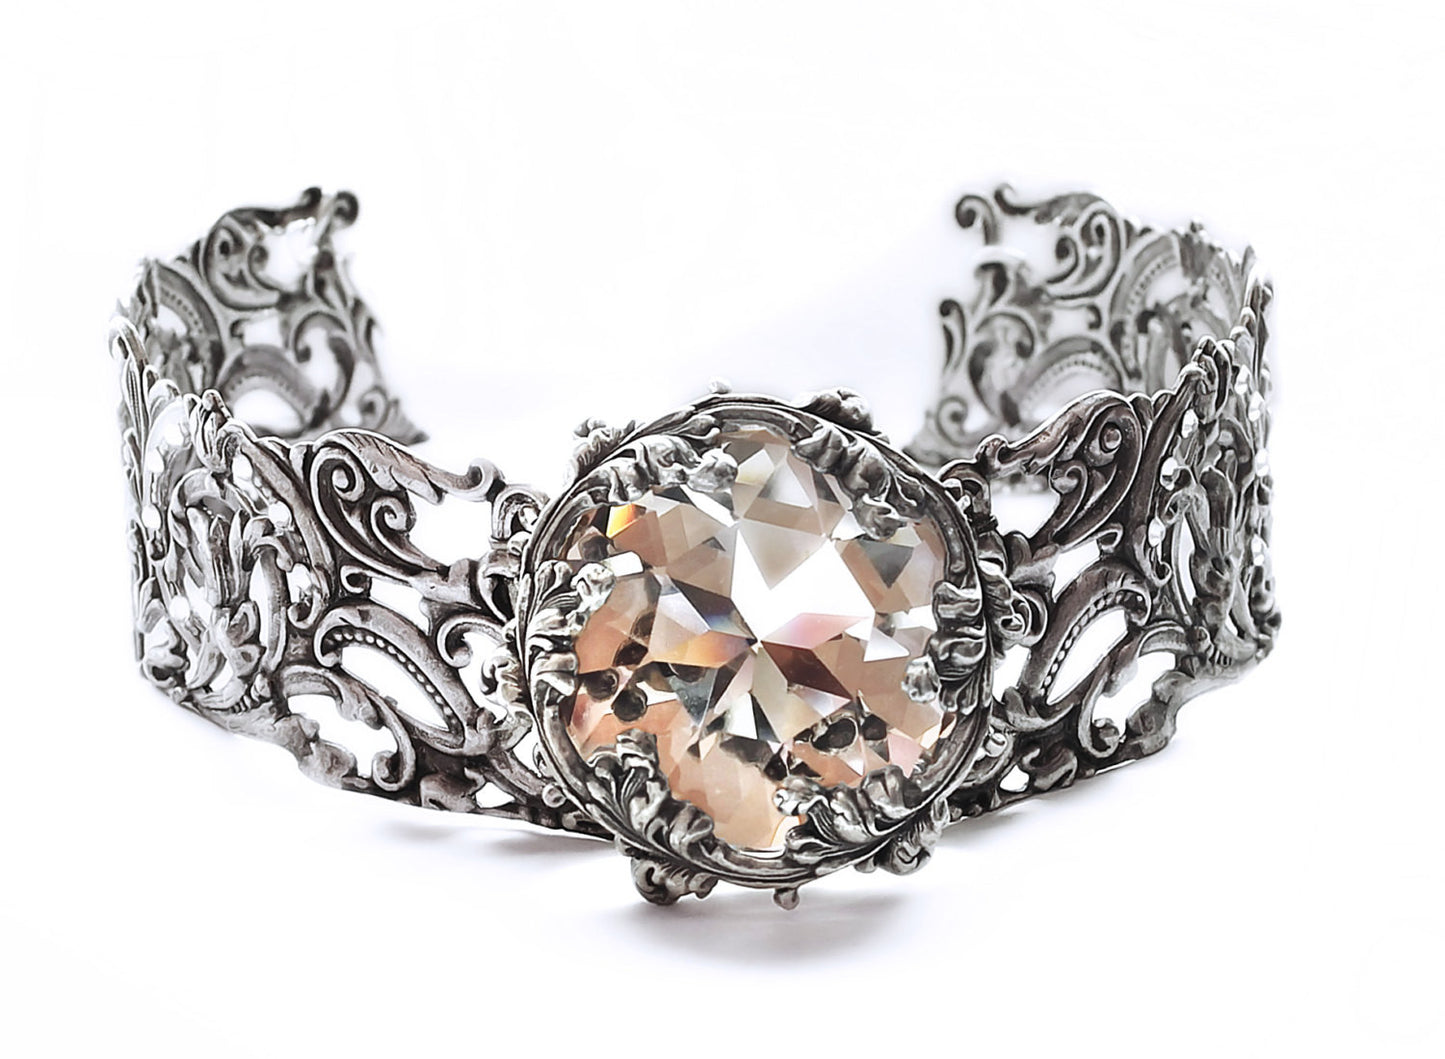 Silver Filigree Choker with Clear Swarovski Crystal - Aranwen's Jewelry
 - 2